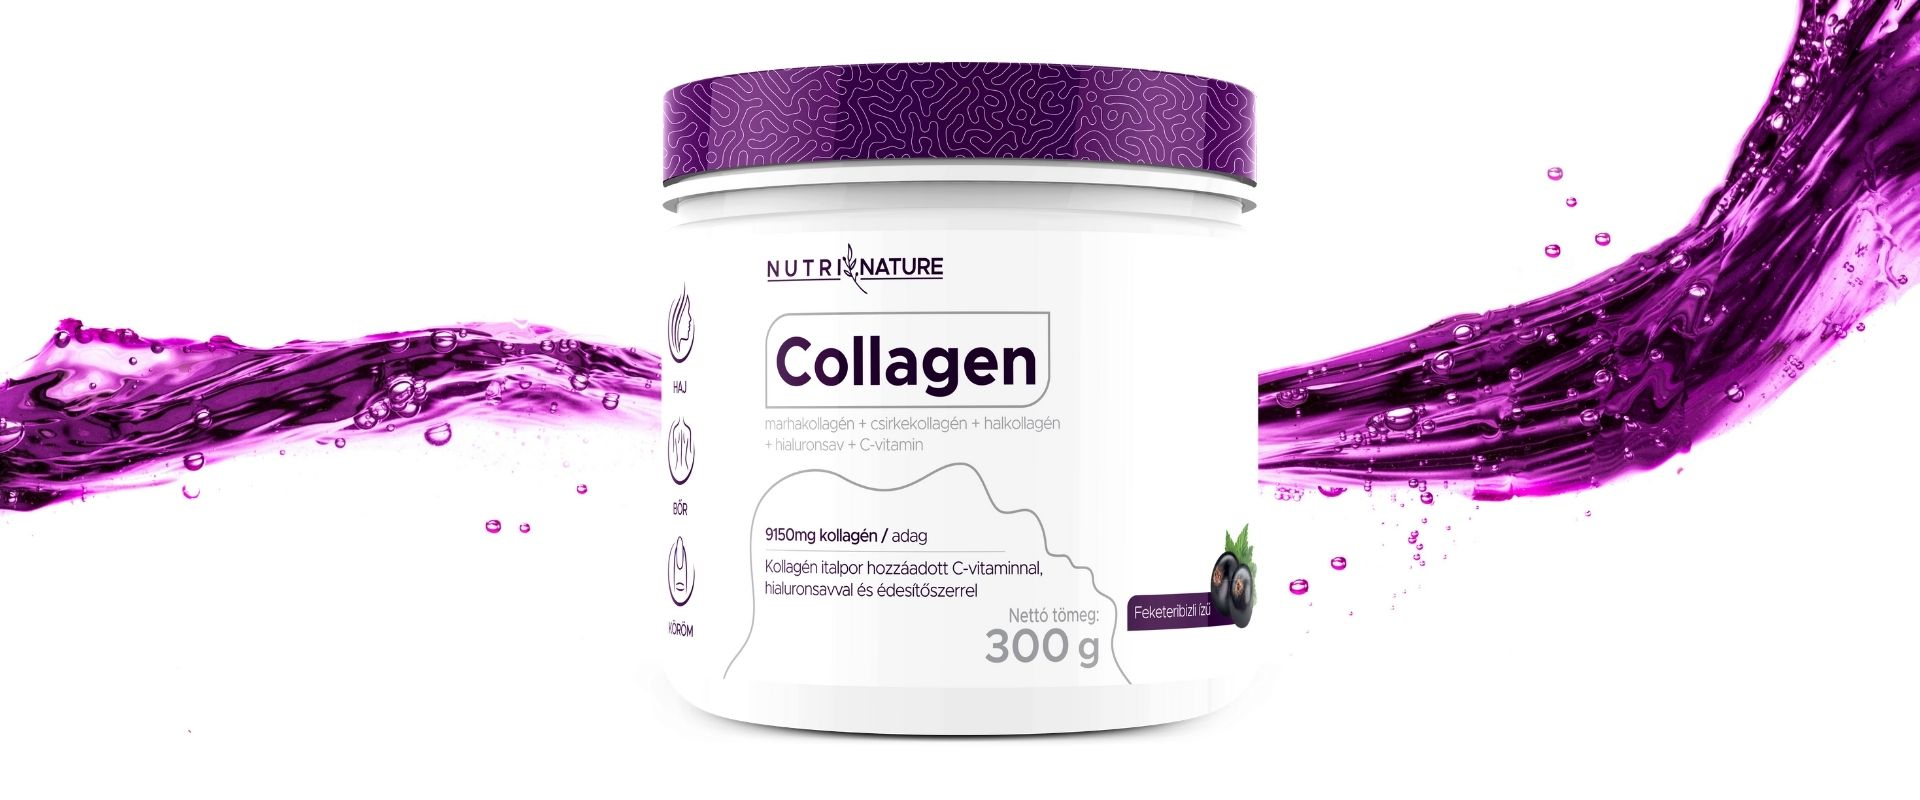 Collagen por, csikre kollagén, marha kollagén, hal kollagén, hyaluron sav és C-vitamin